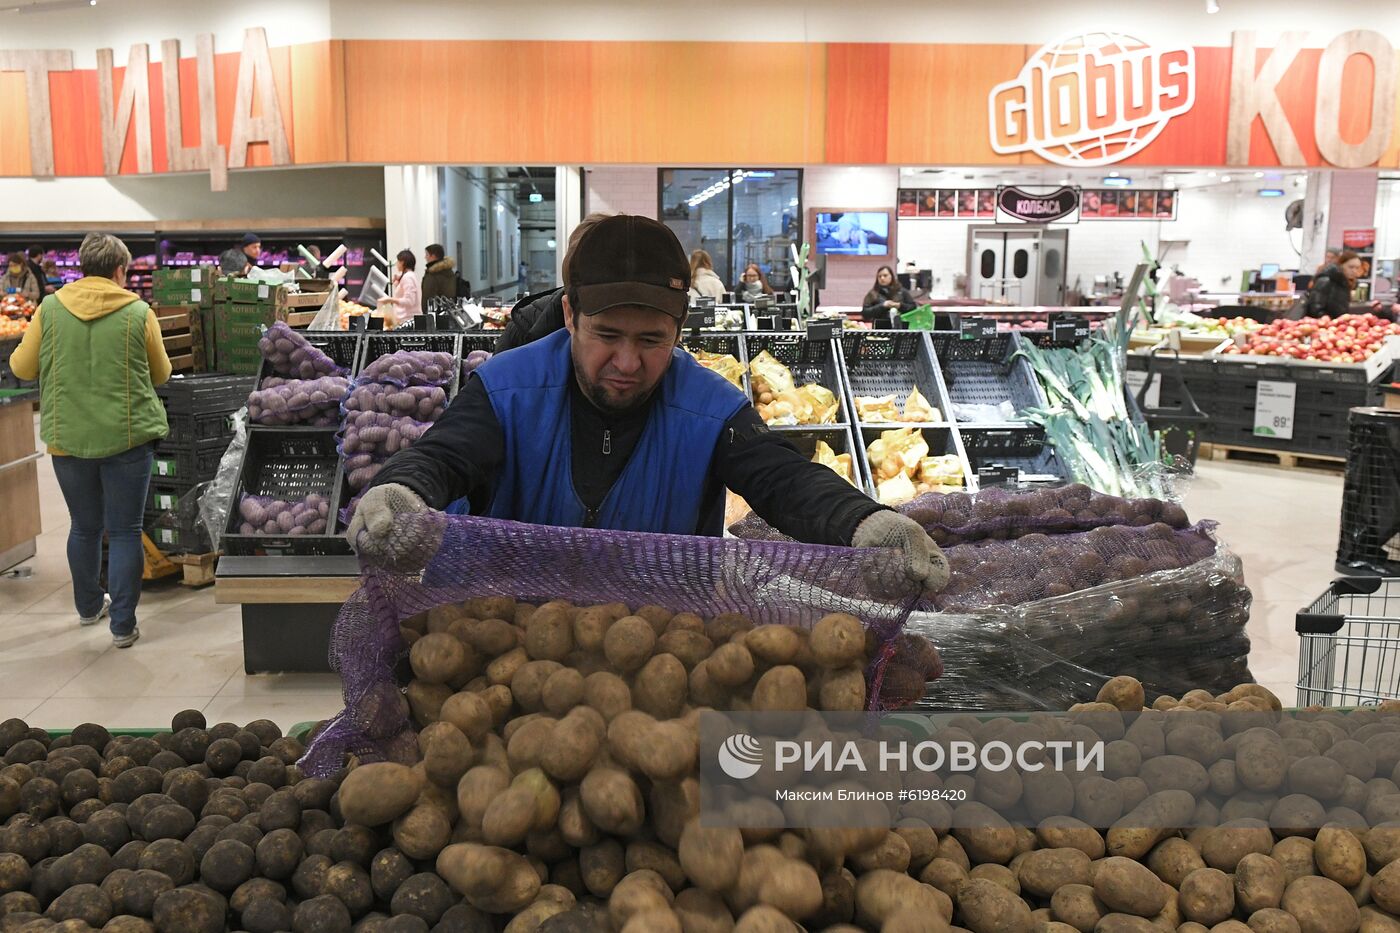 Гипермаркет "Глобус" в Москве